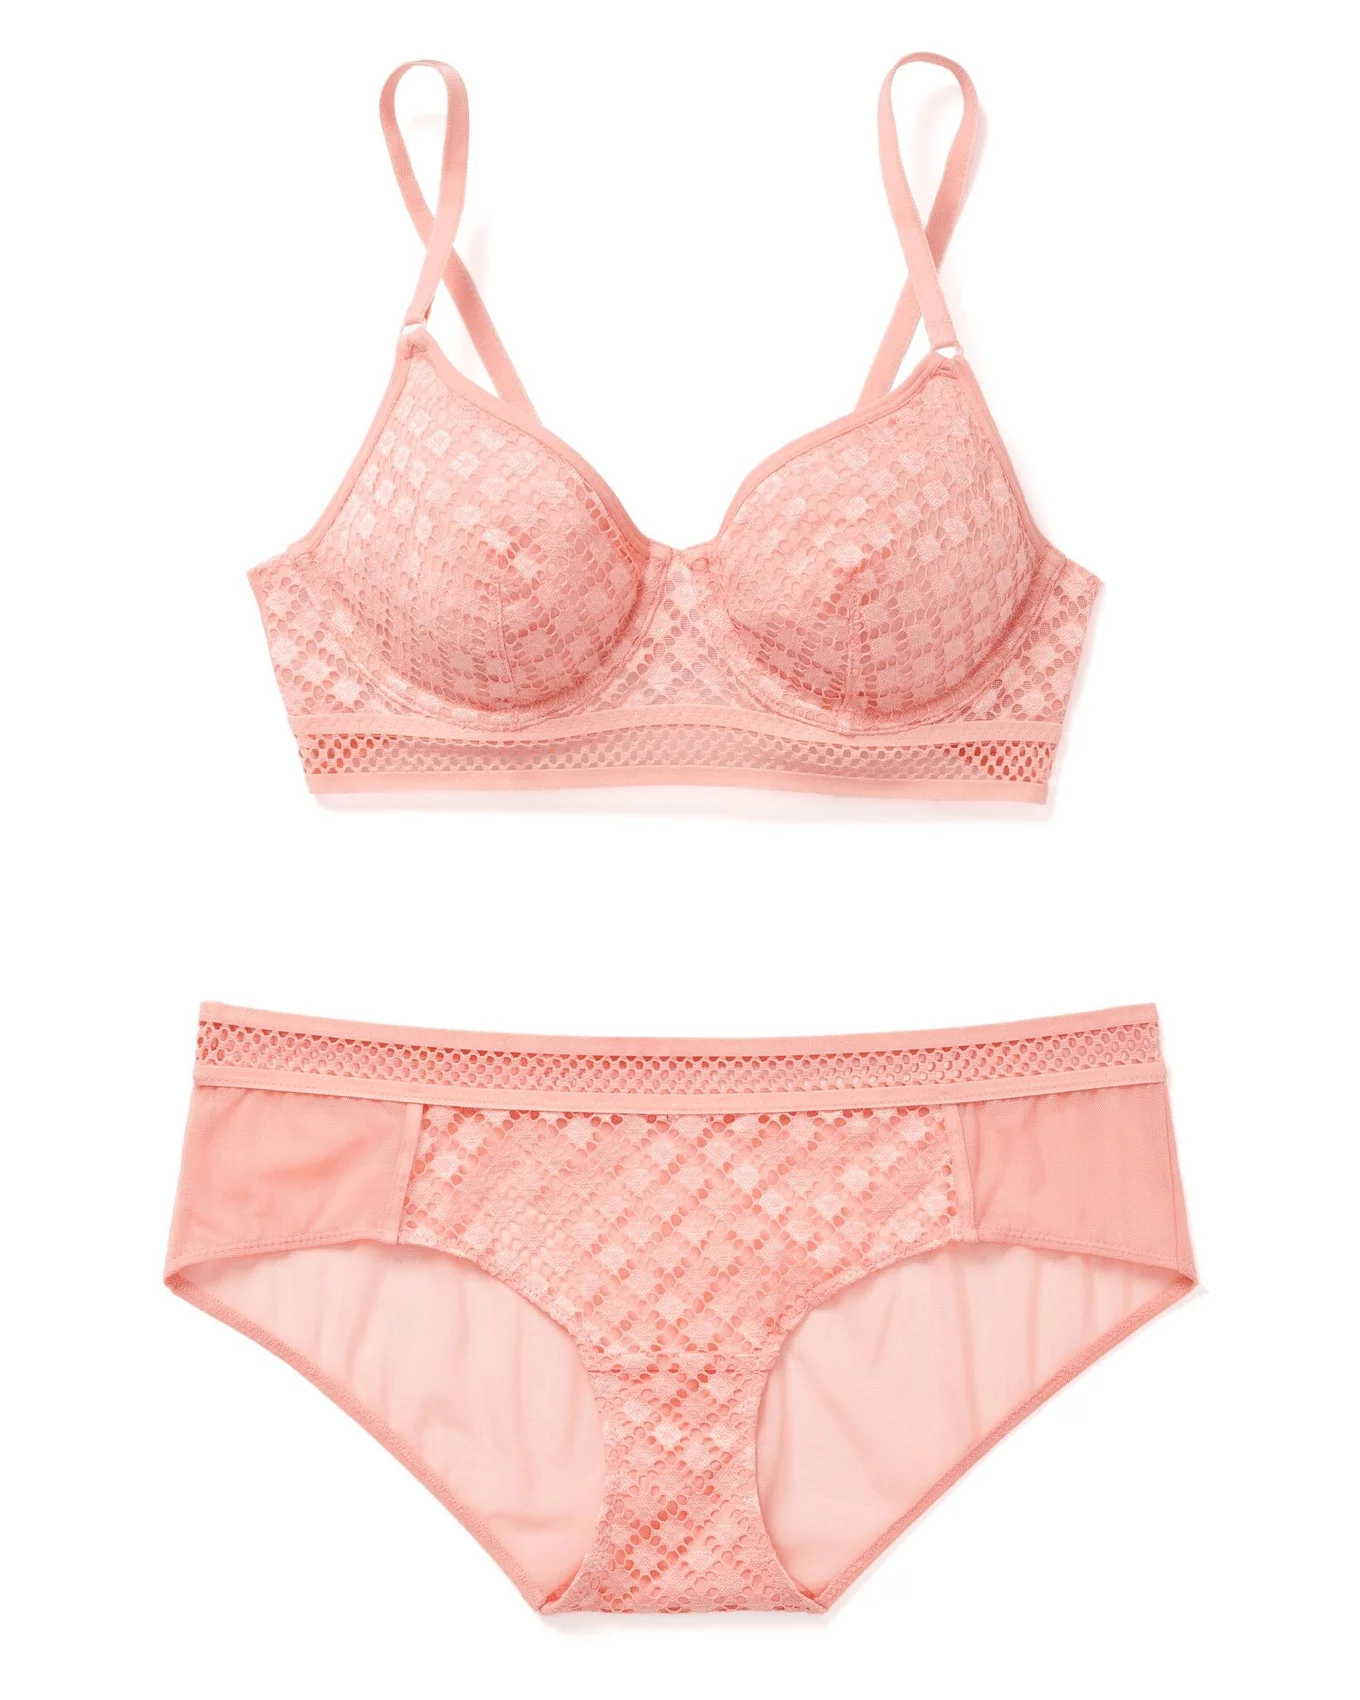 Boutique PRINCESSE TAM TAM Light pink satin with white dots Paulette bra Size  36A/34B